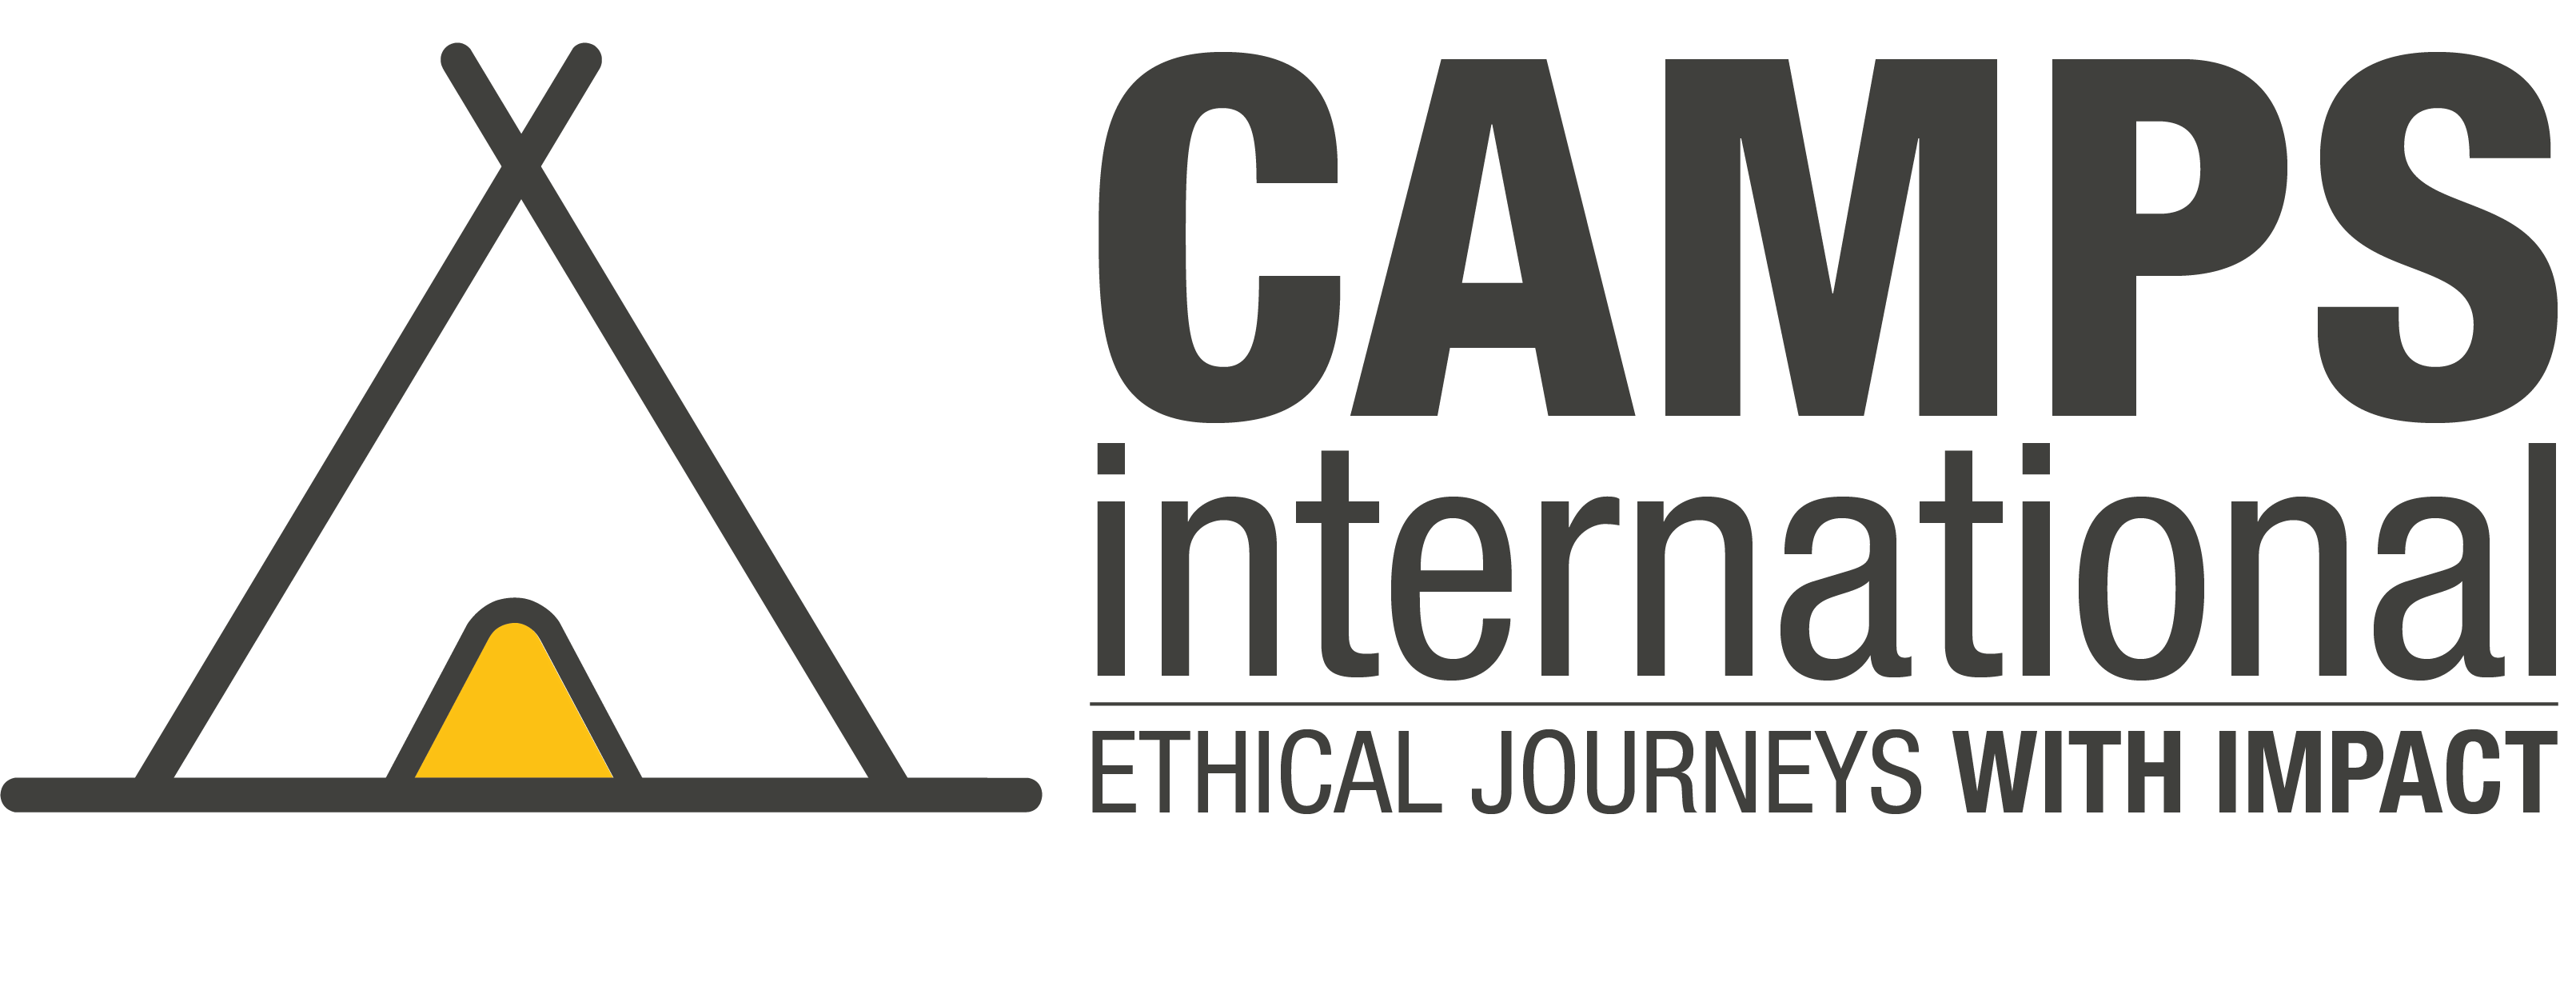 Camps International UAE logo